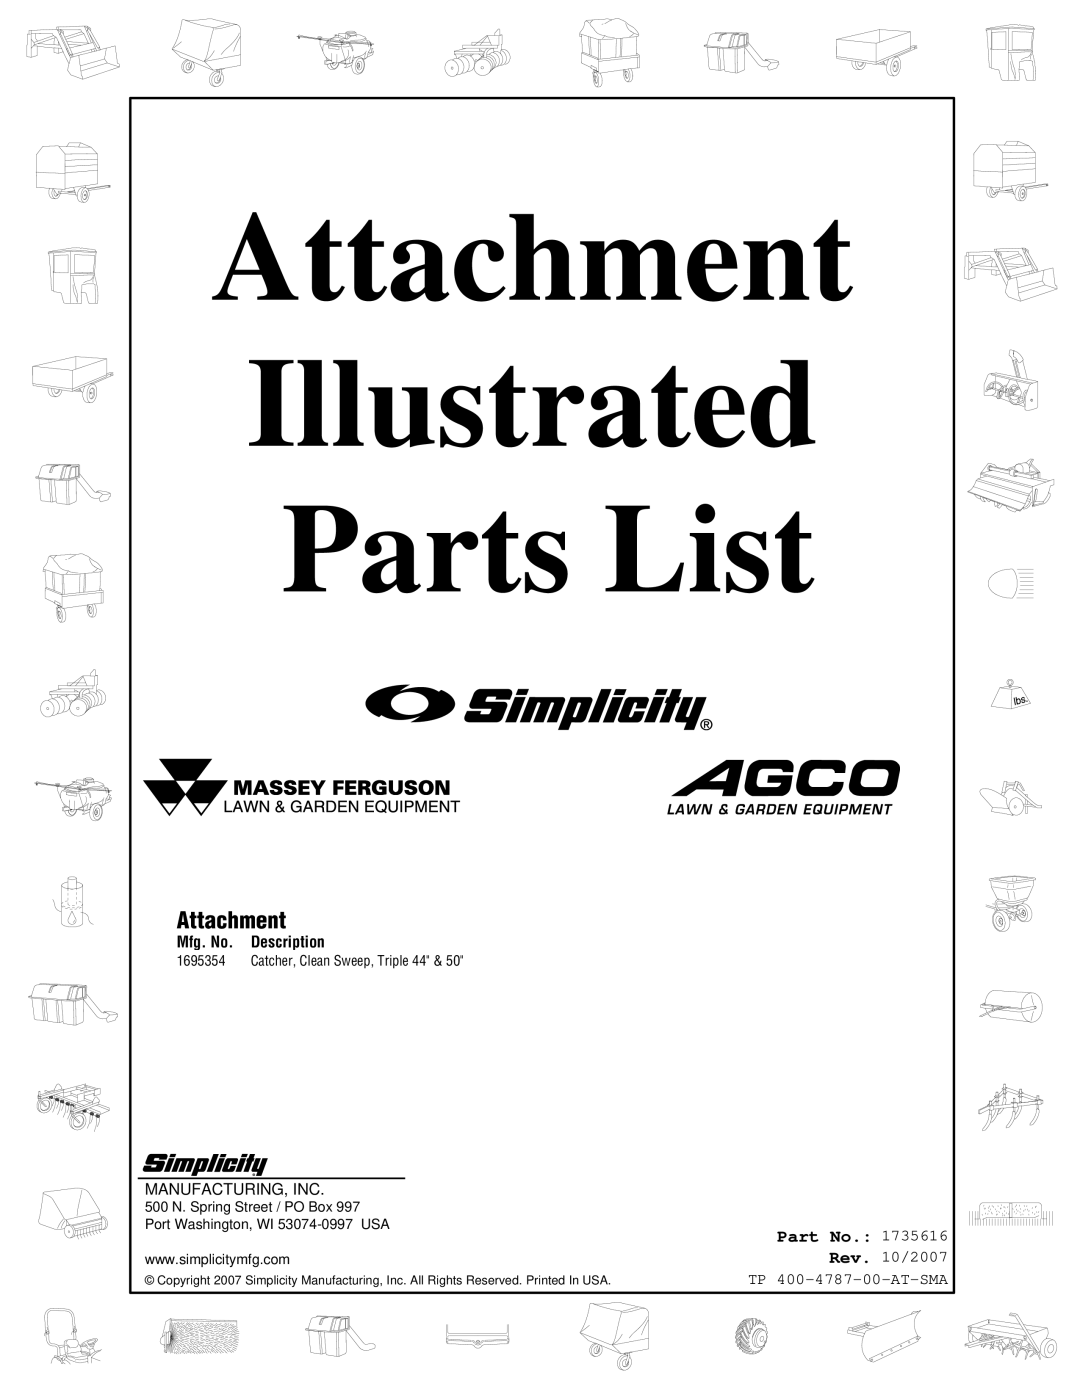 Snapper manual Attachment, Mfg. No, Description, Illustrated, Parts List, Rev. 10/2007, TP 400-4787-00-AT-SMA 